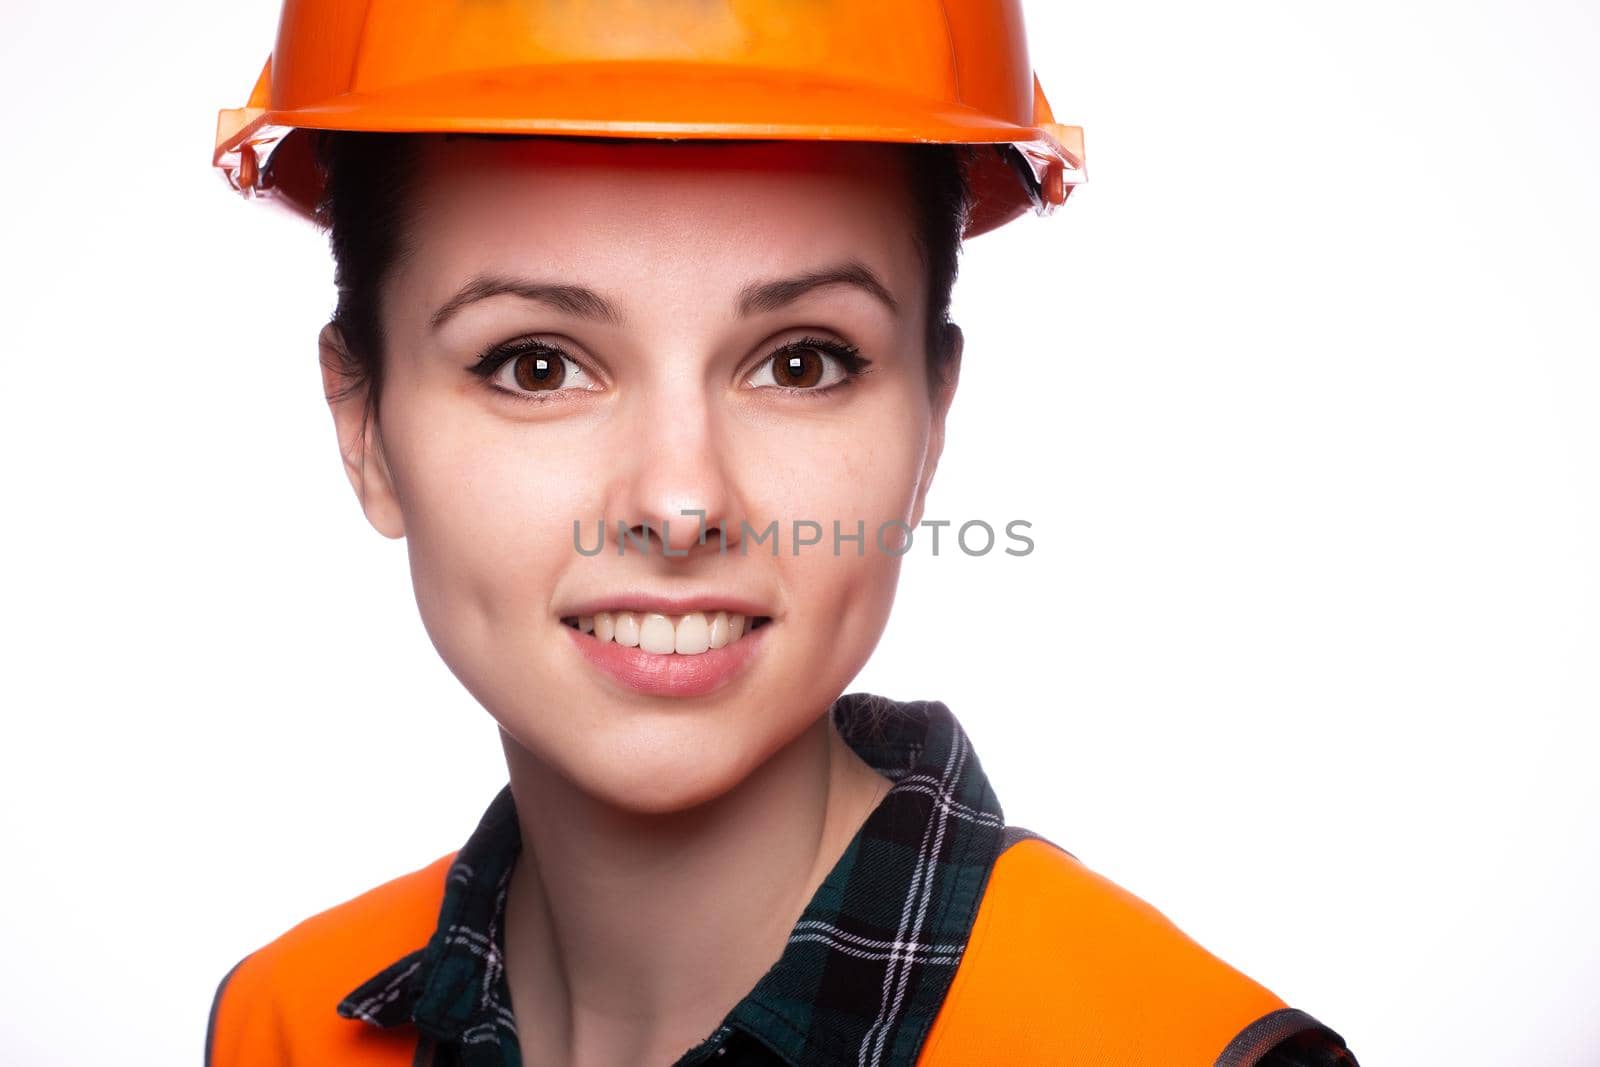 woman in construction safety helmet and orange vest, close-up portrait by shilovskaya